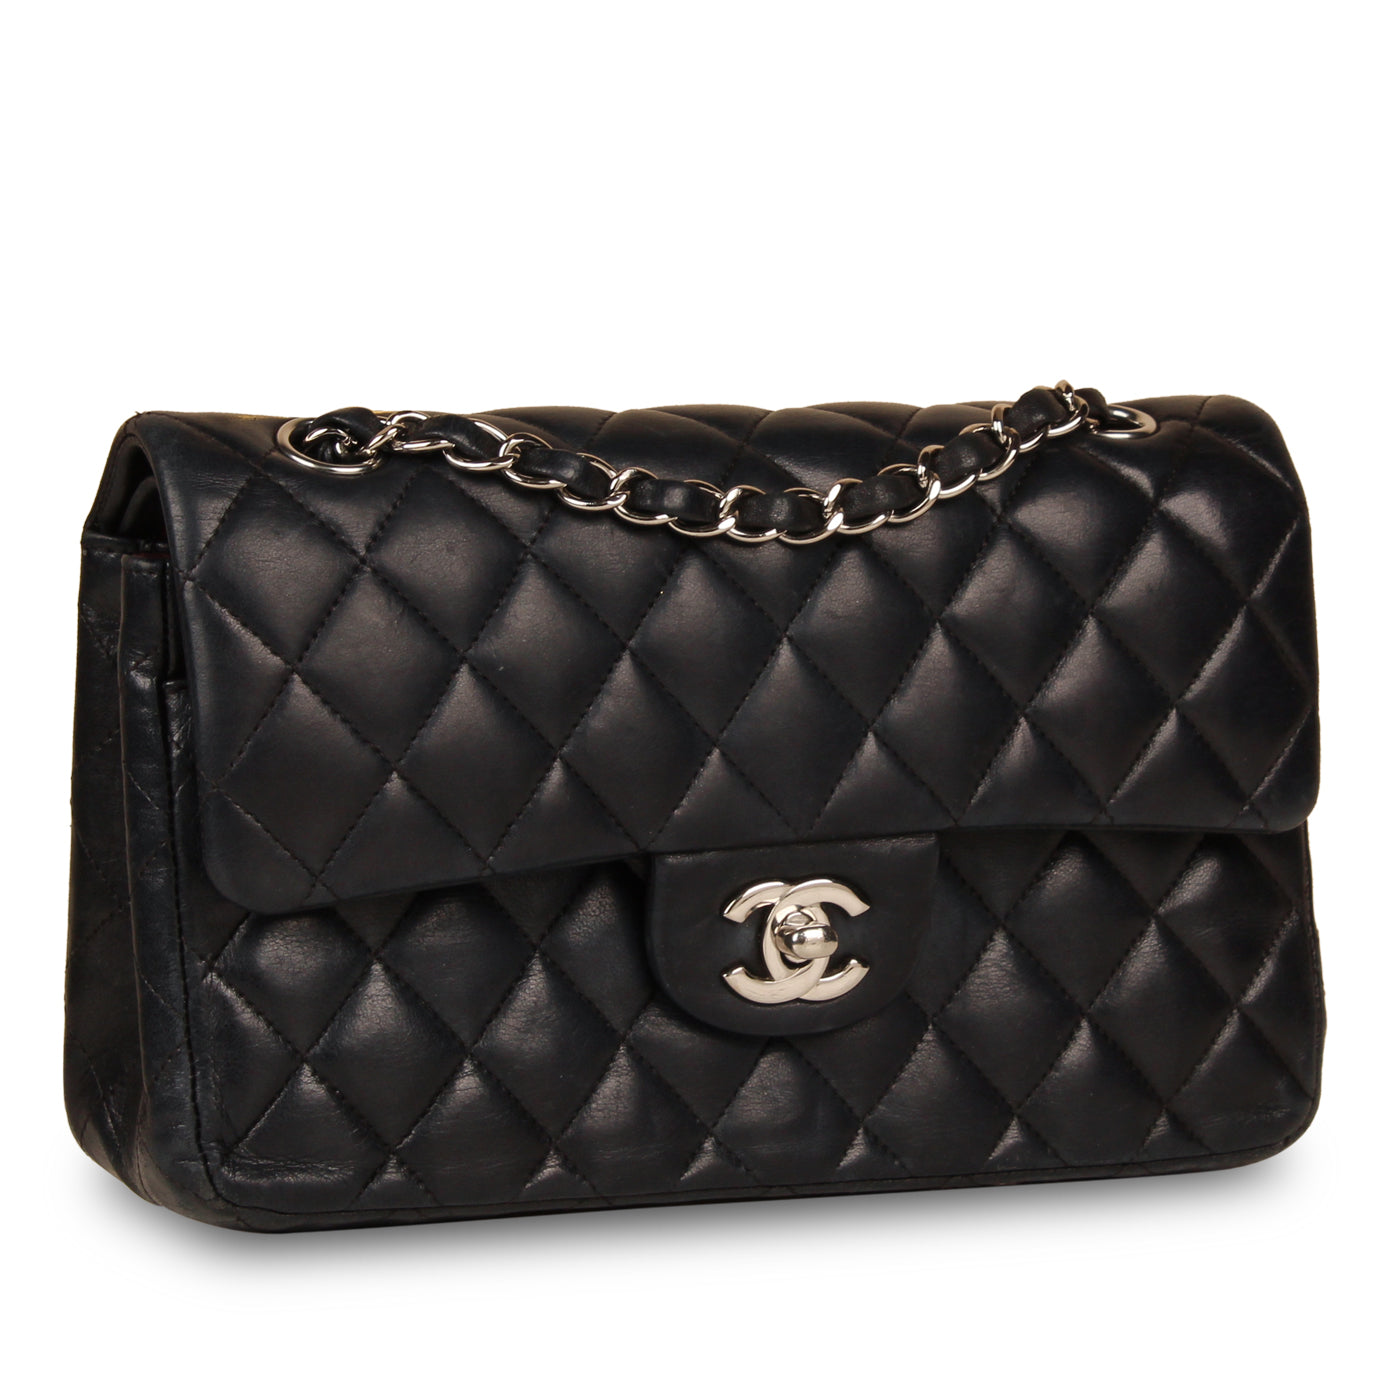 Chanel - Classic Flap Bag - Small - Black Lambskin - SHW - Pre-Loved